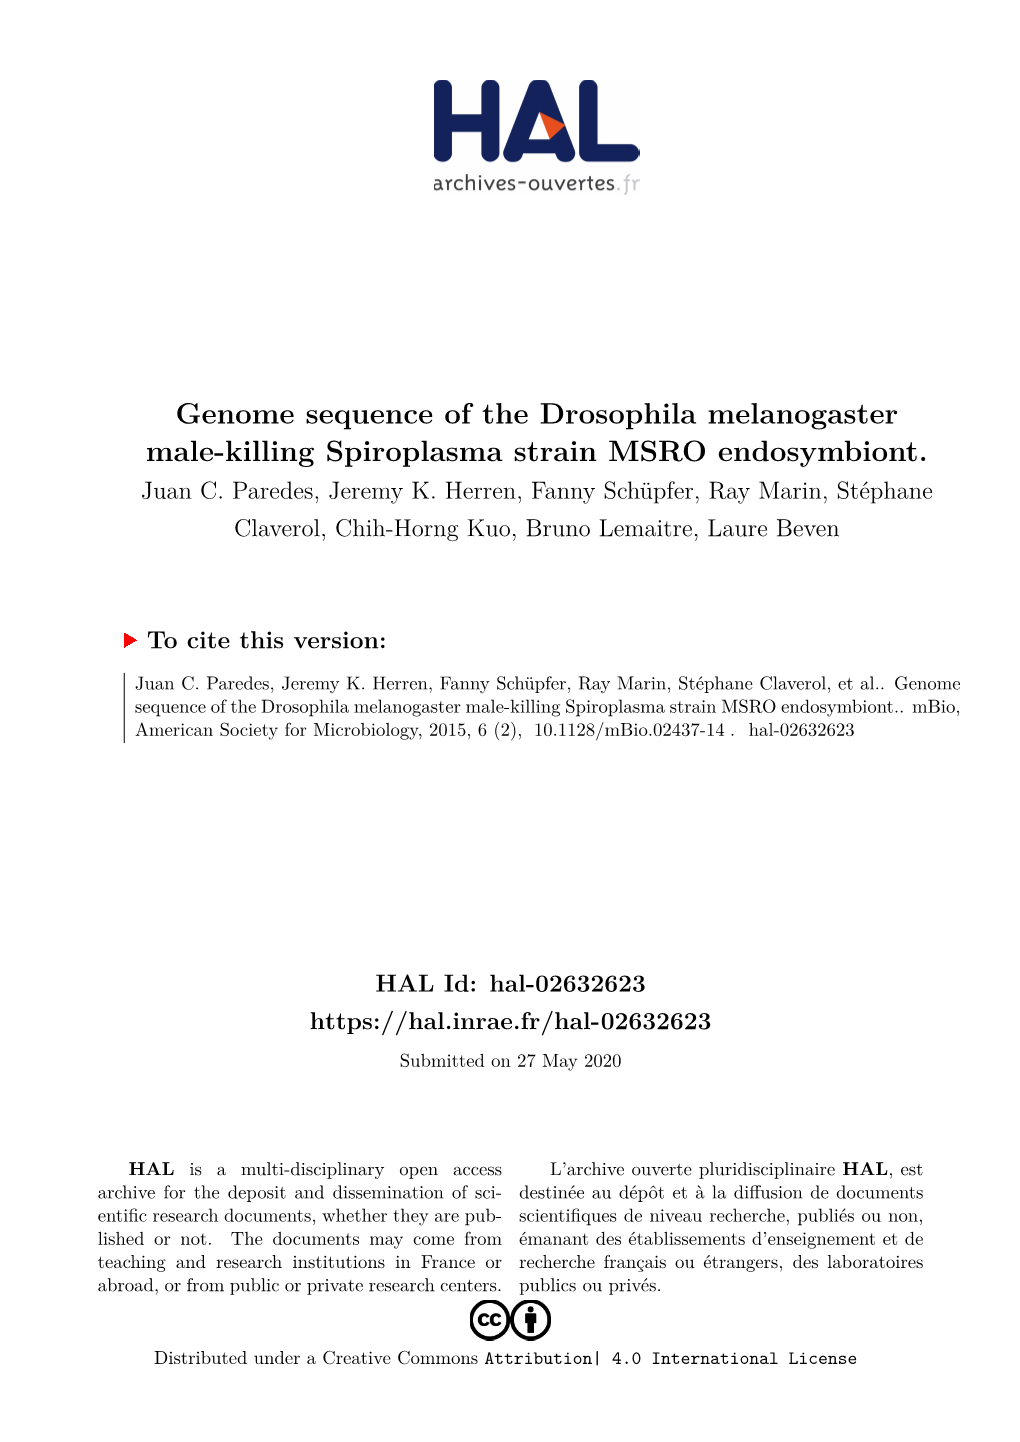 Genome Sequence of the Drosophila Melanogaster Male-Killing Spiroplasma Strain MSRO Endosymbiont